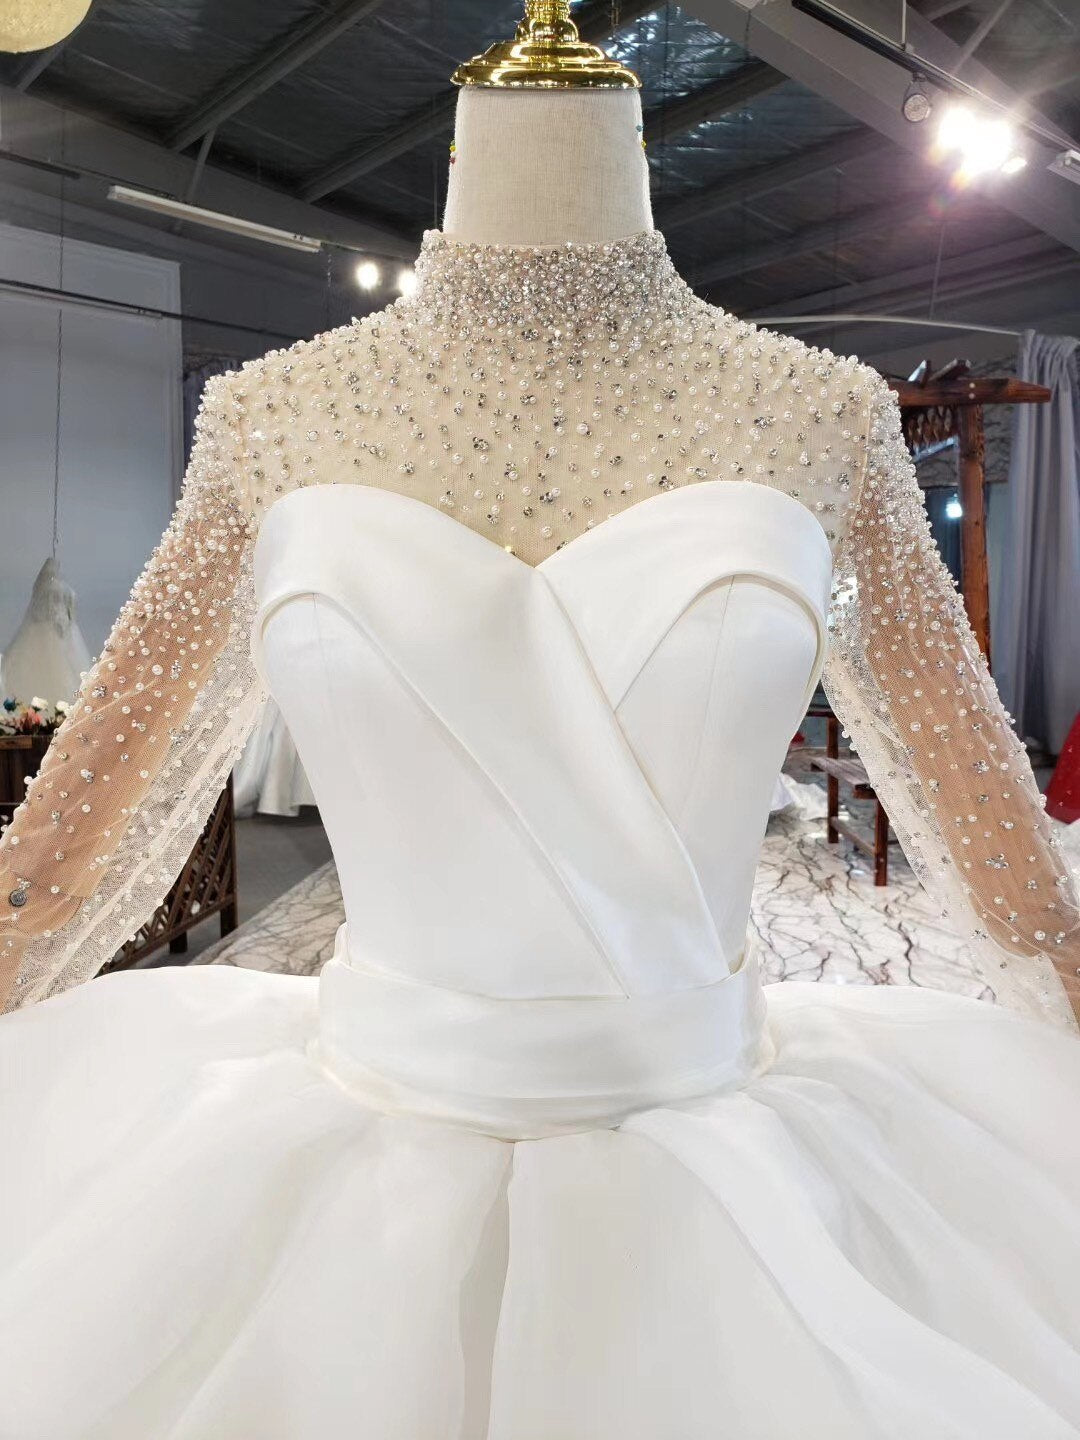 High Neckline Luxury Ball-gown Wedding Dress Satin Fabrics Elegant Princess Wedding Gown - LiveTrendsX